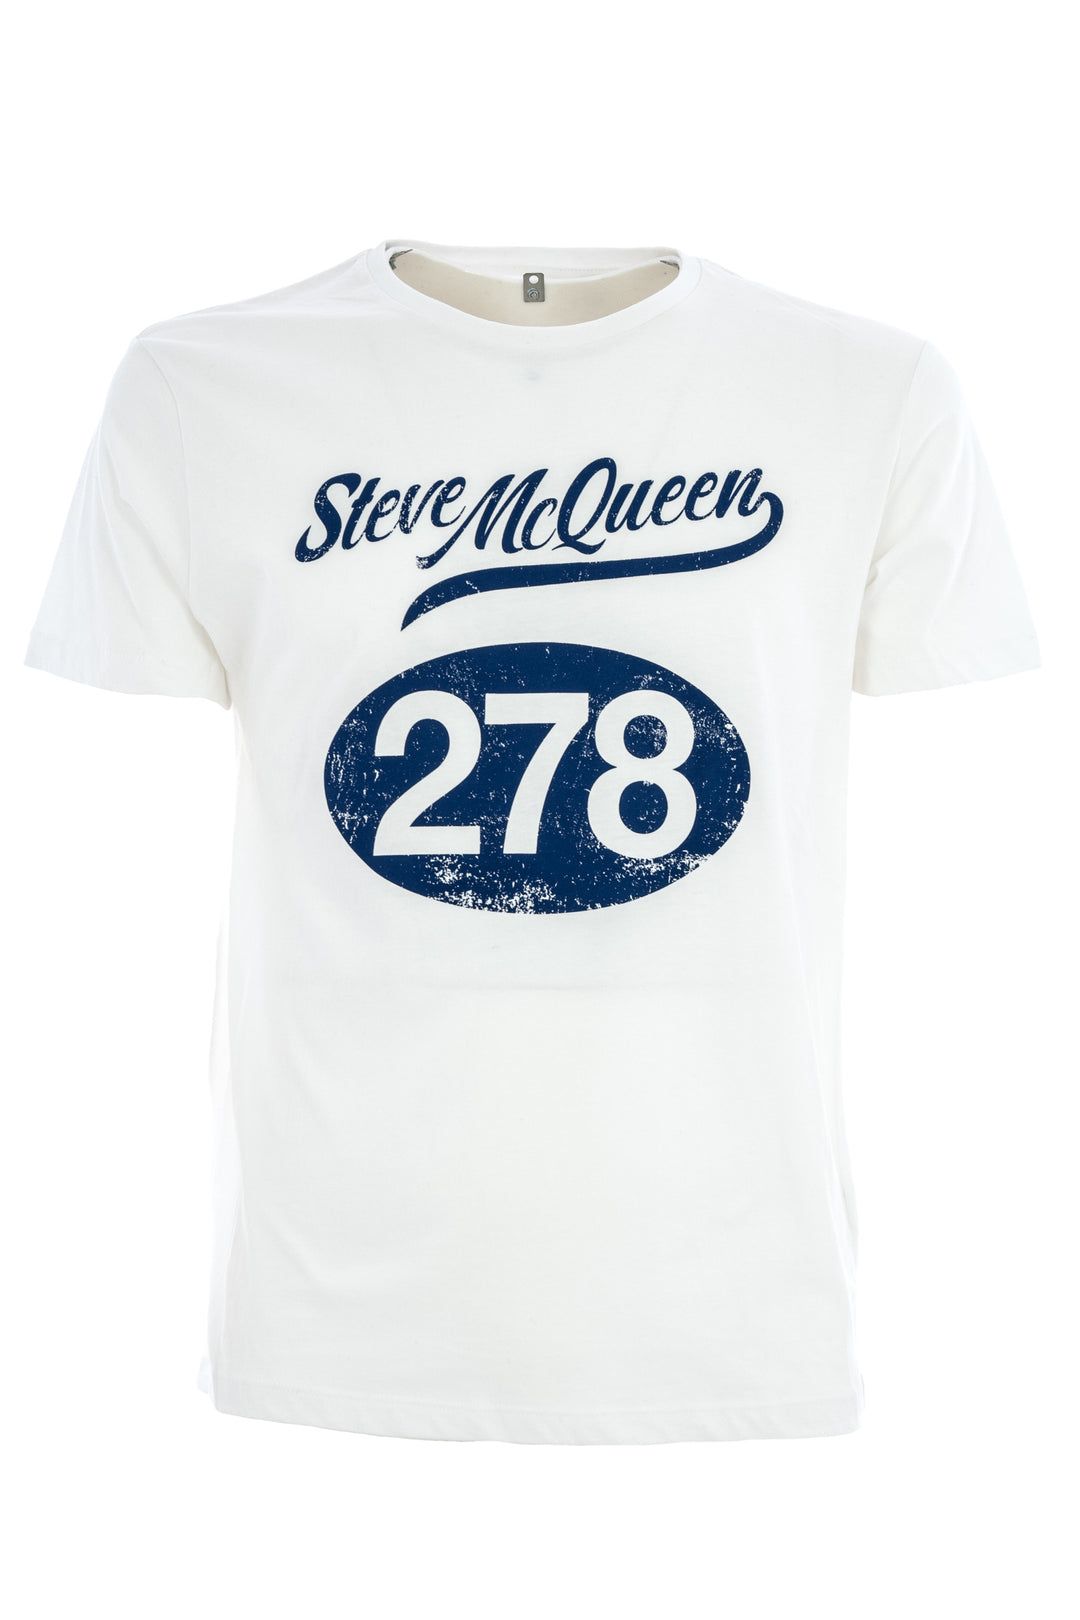 TEN-FIFTEEN T-shirt bianca in cotone con stampa Steve McQueen - Mancinelli 1954